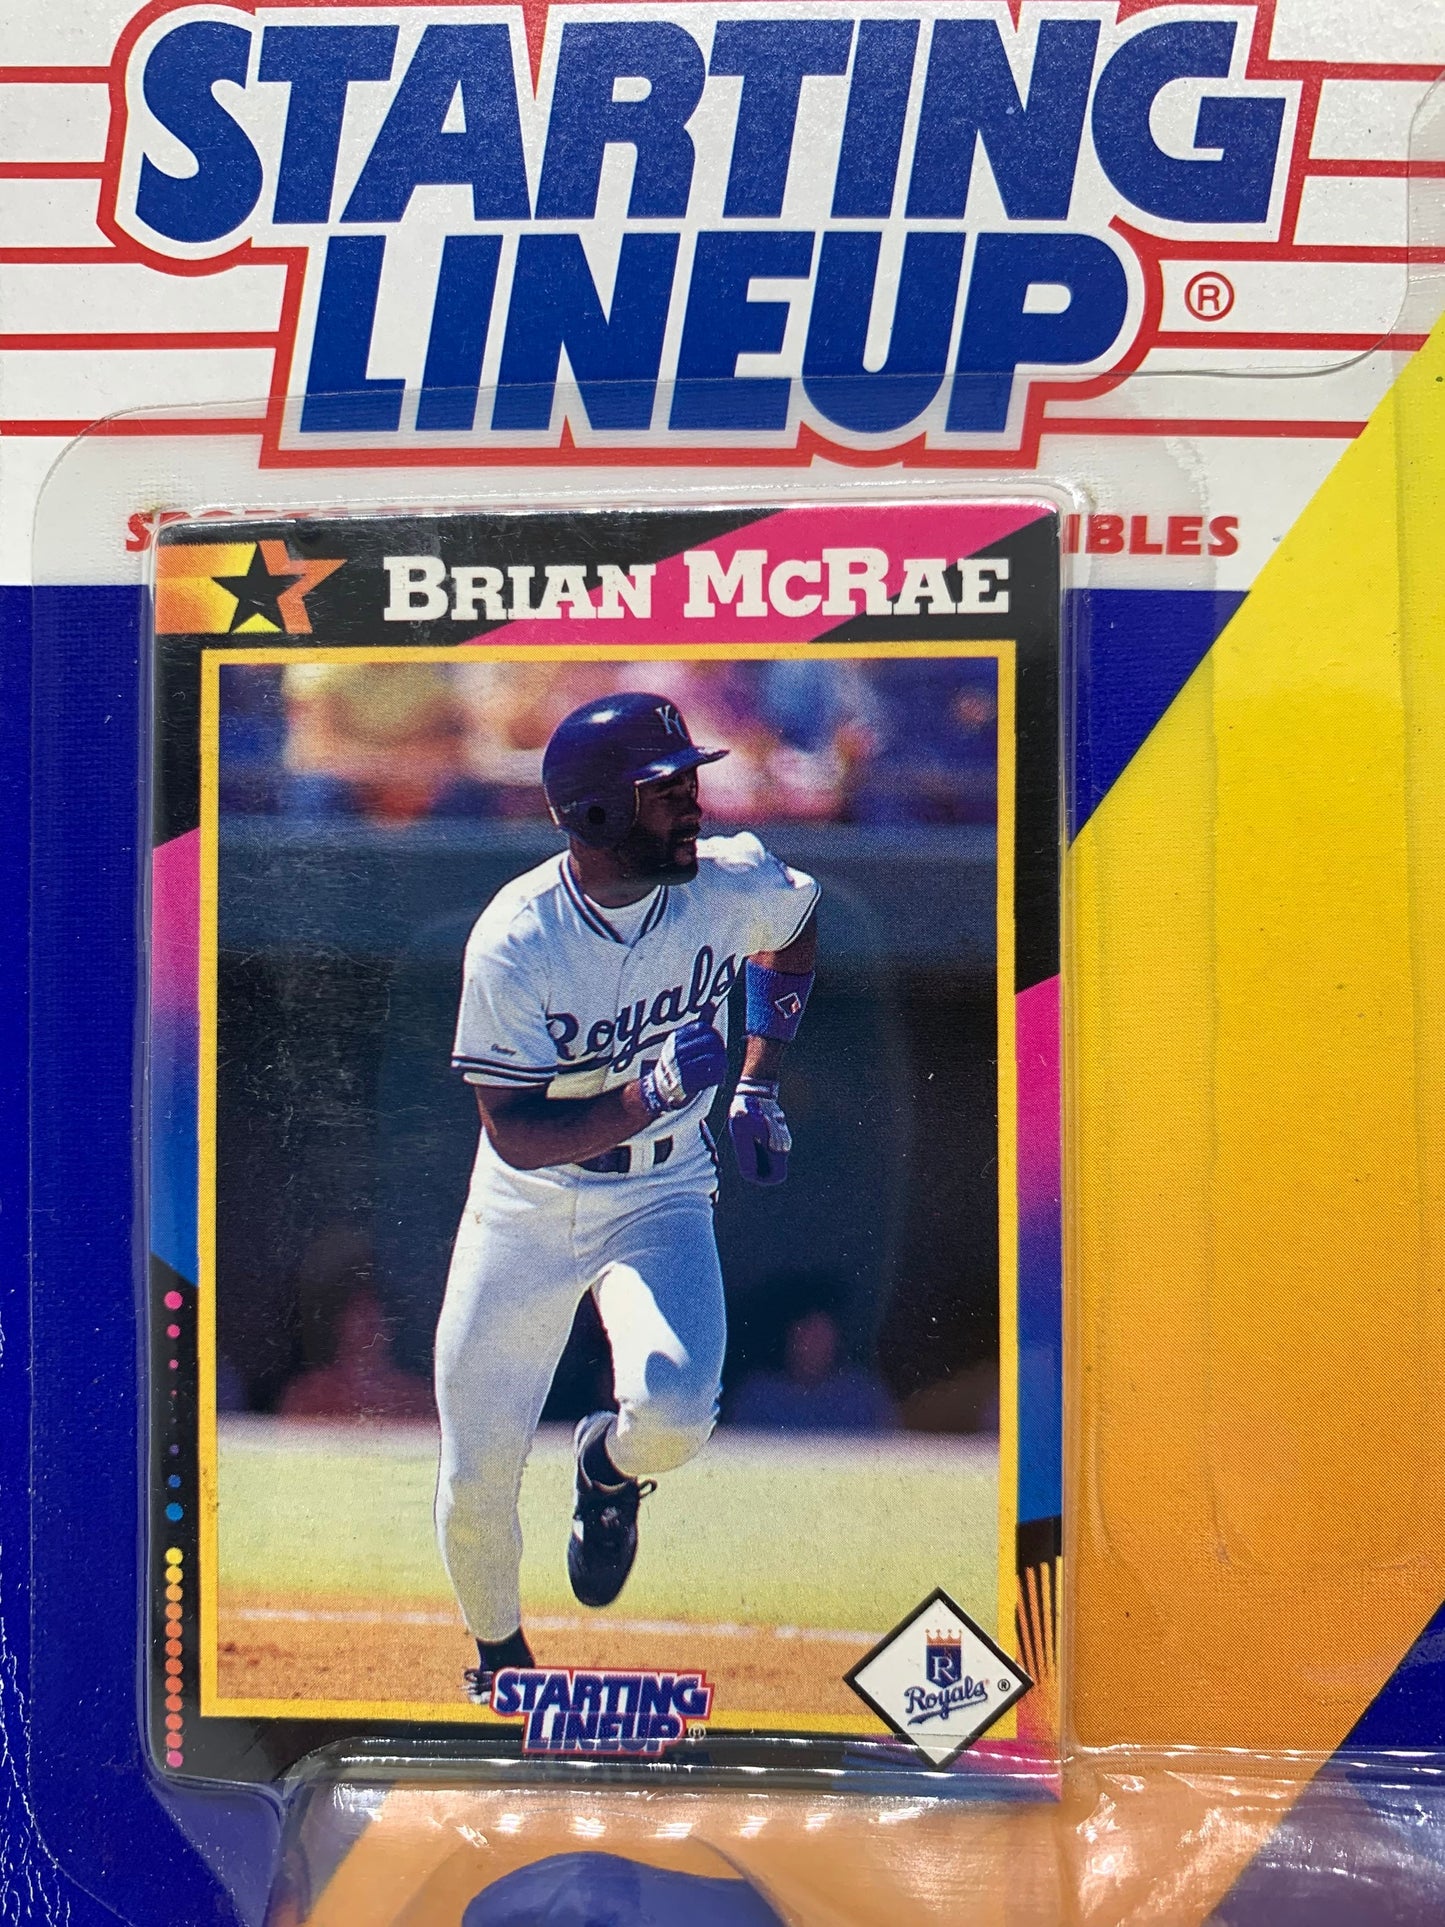 Starting Lineup Brian McRae Kansas City Royals Action Figure Gray 1992 Kenner Collectable MLB Baseball Figurine Perfect Birthday Gift